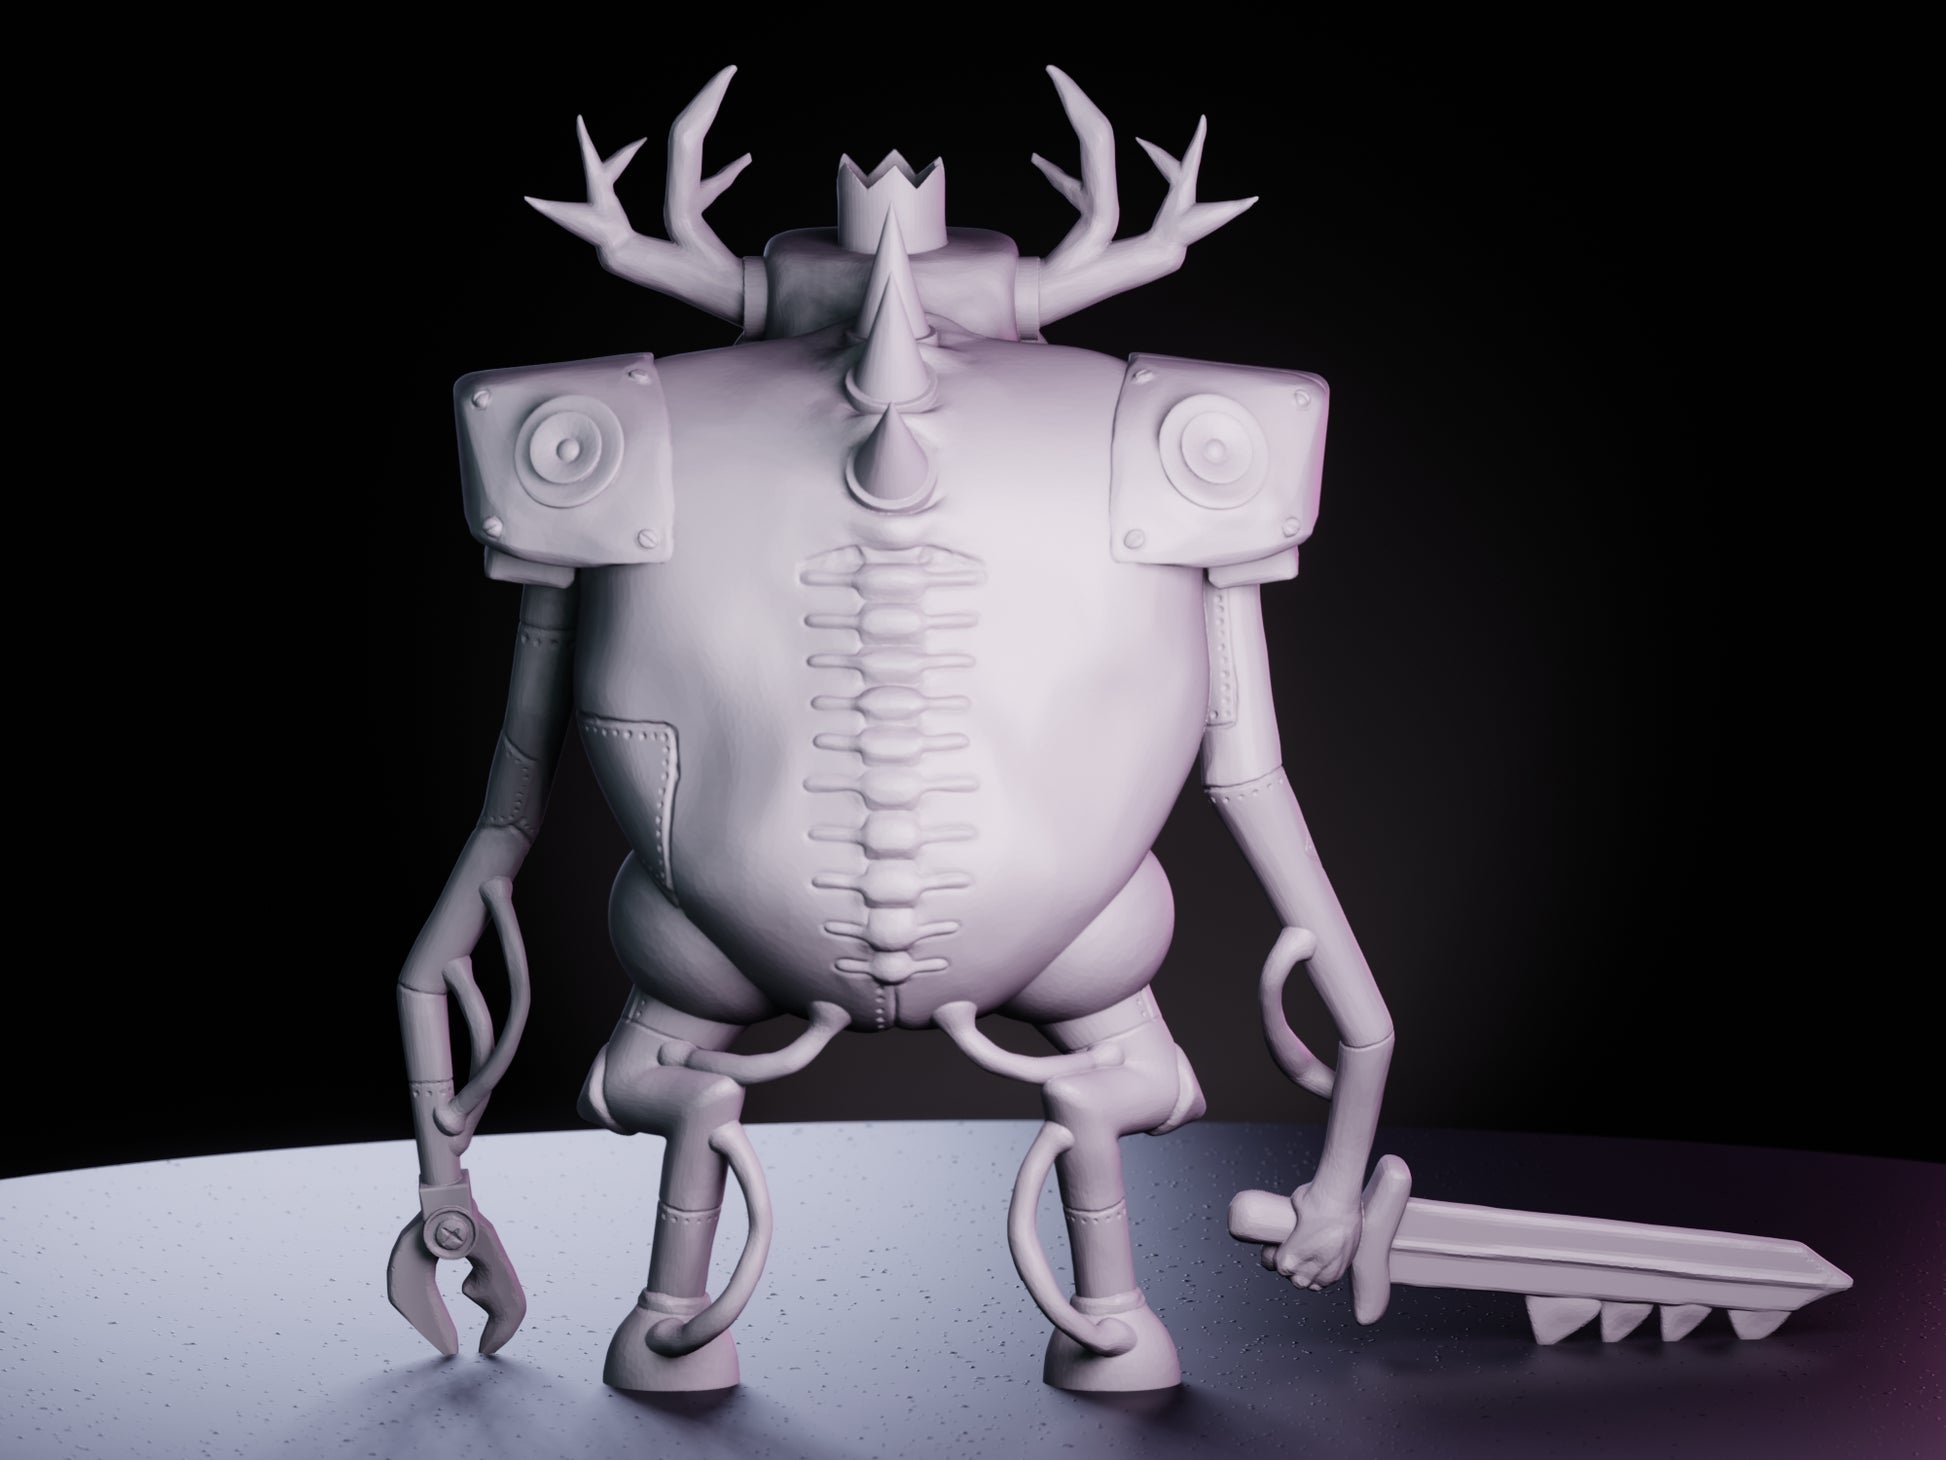 SCP-096 skeleton 3D model 3D printable